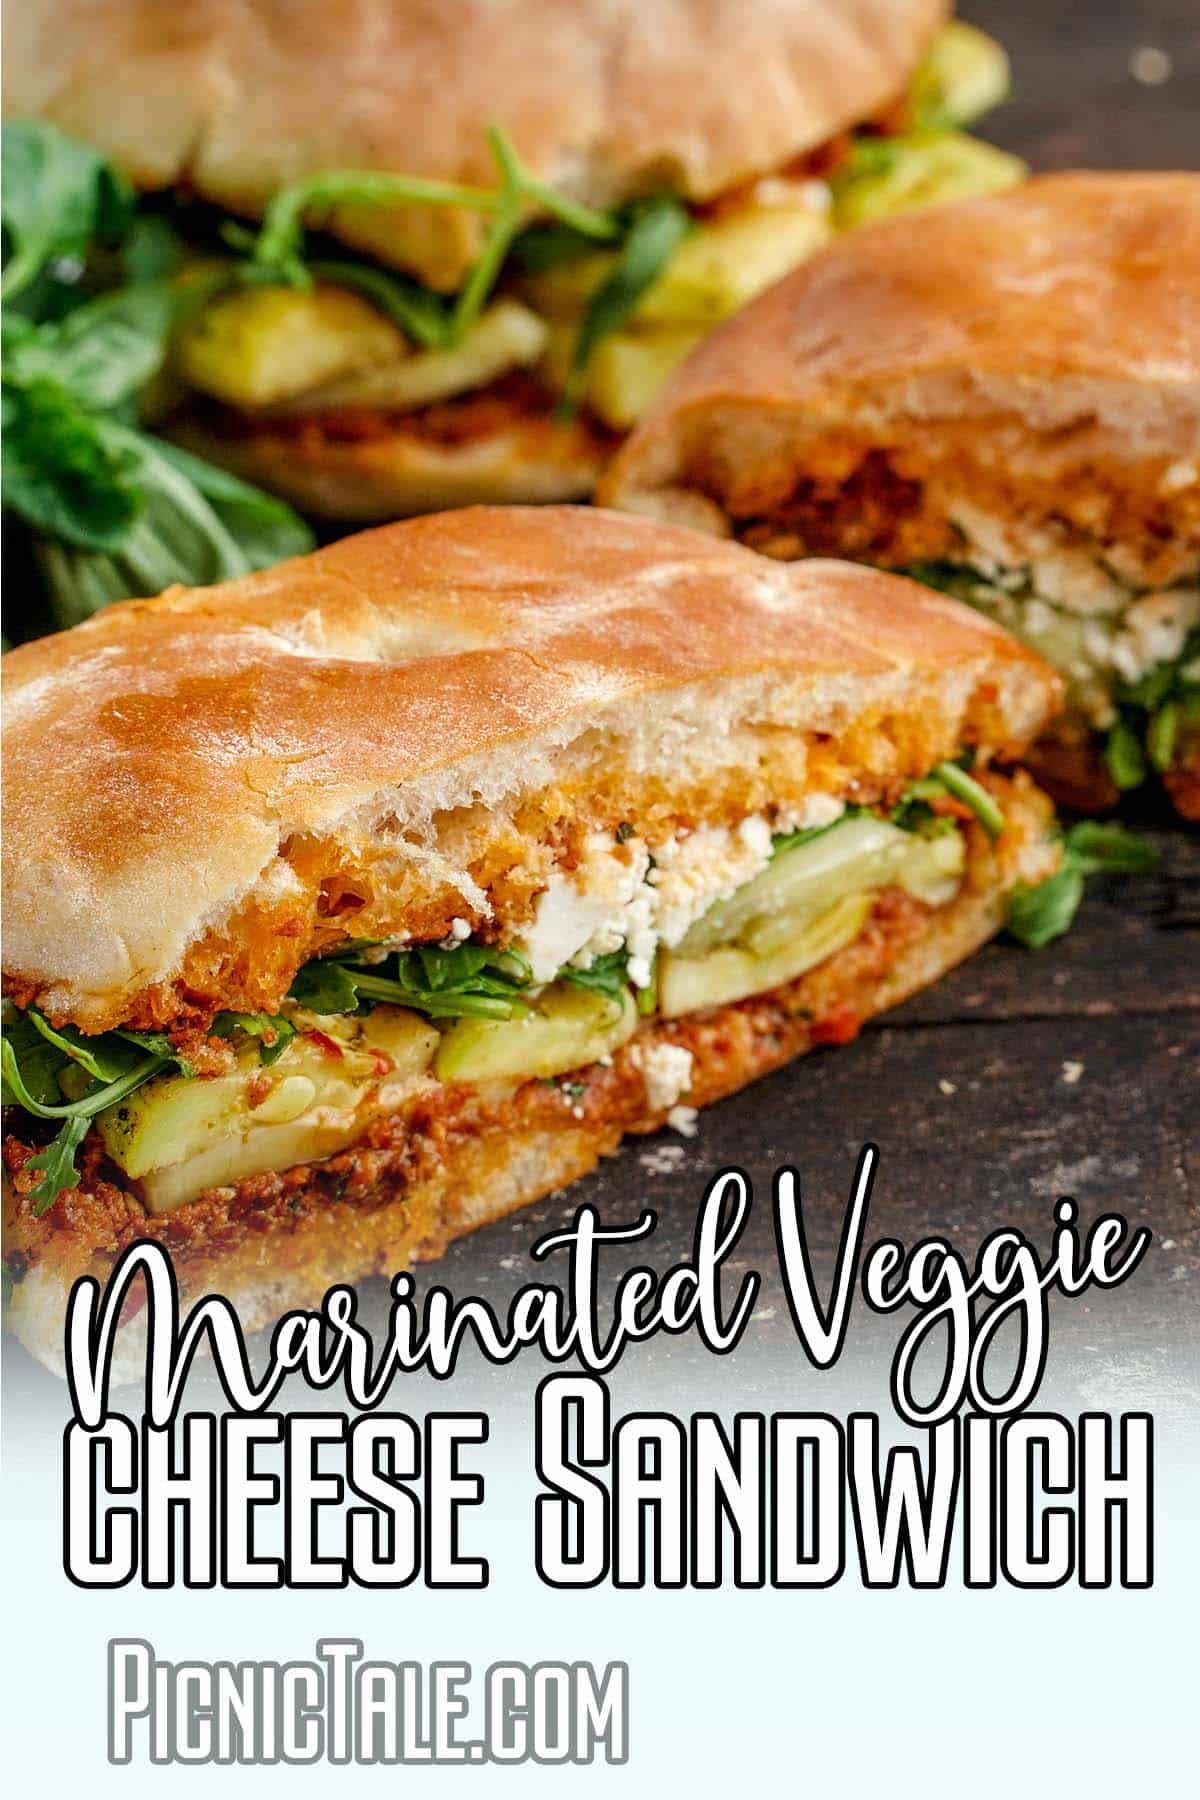 Marinated veggie cheese sandwich, cut wording on bottom.